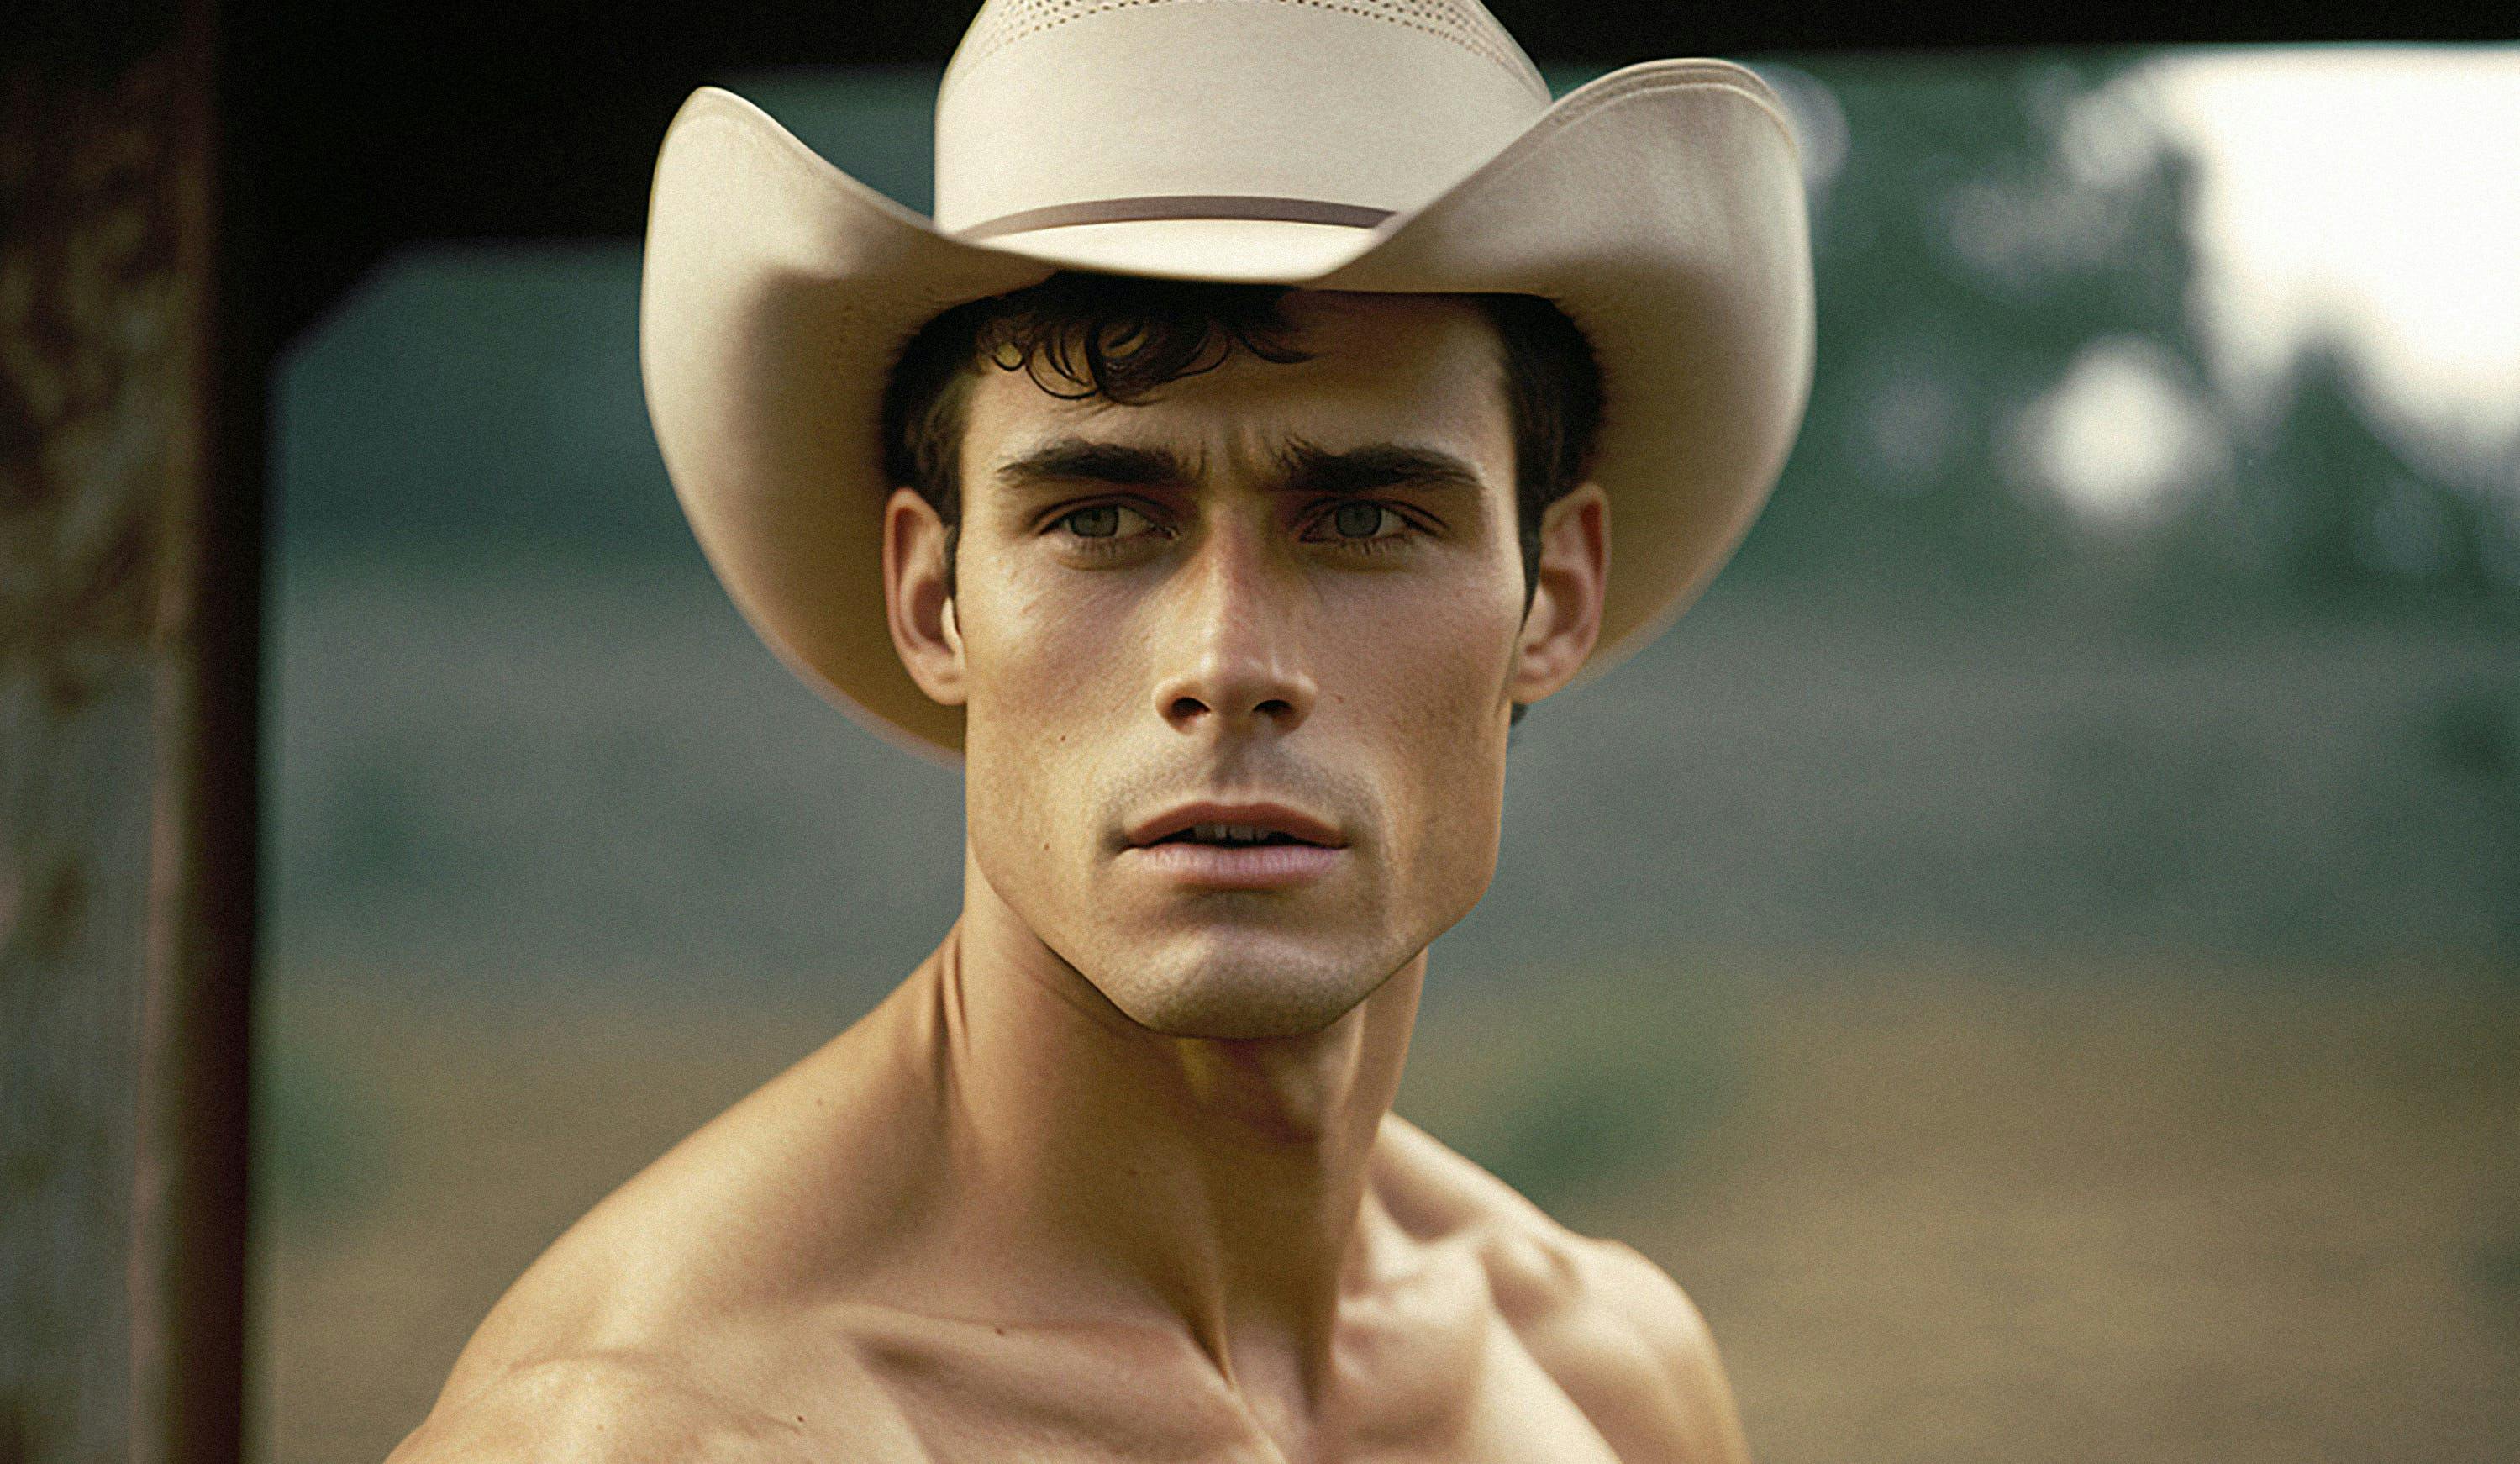 clothing hat cowboy hat adult male man person face head sun hat